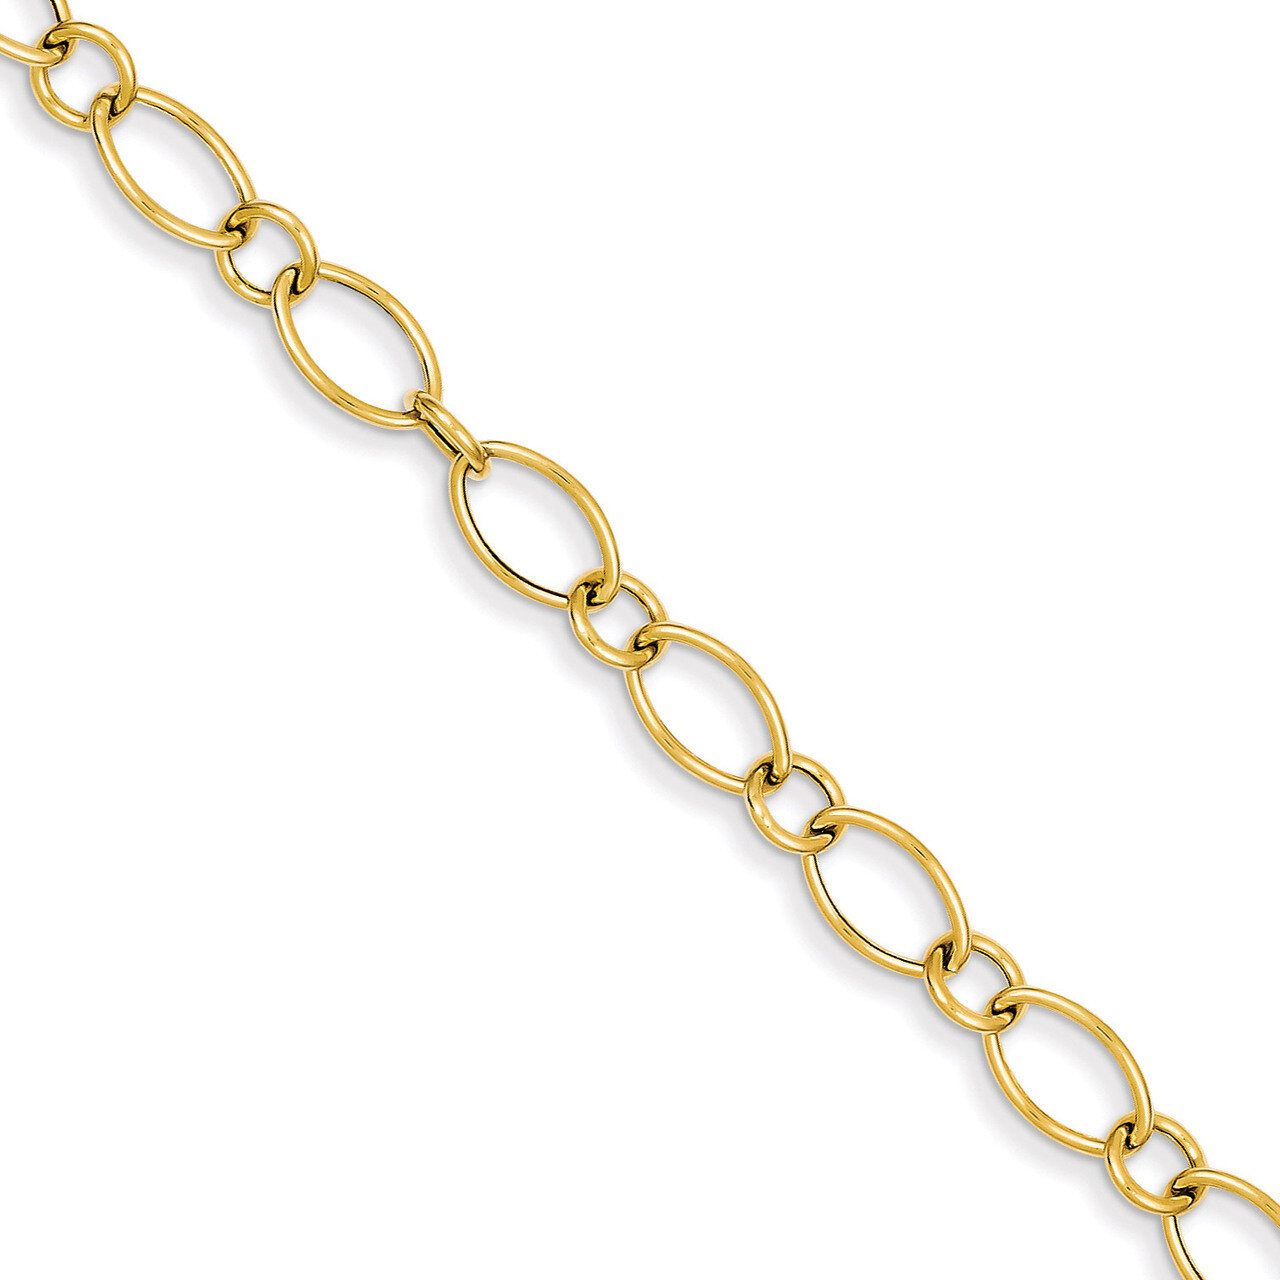 Oval & Circles Design Bracelet 7.25 Inch 14k Gold FB1326-7.25